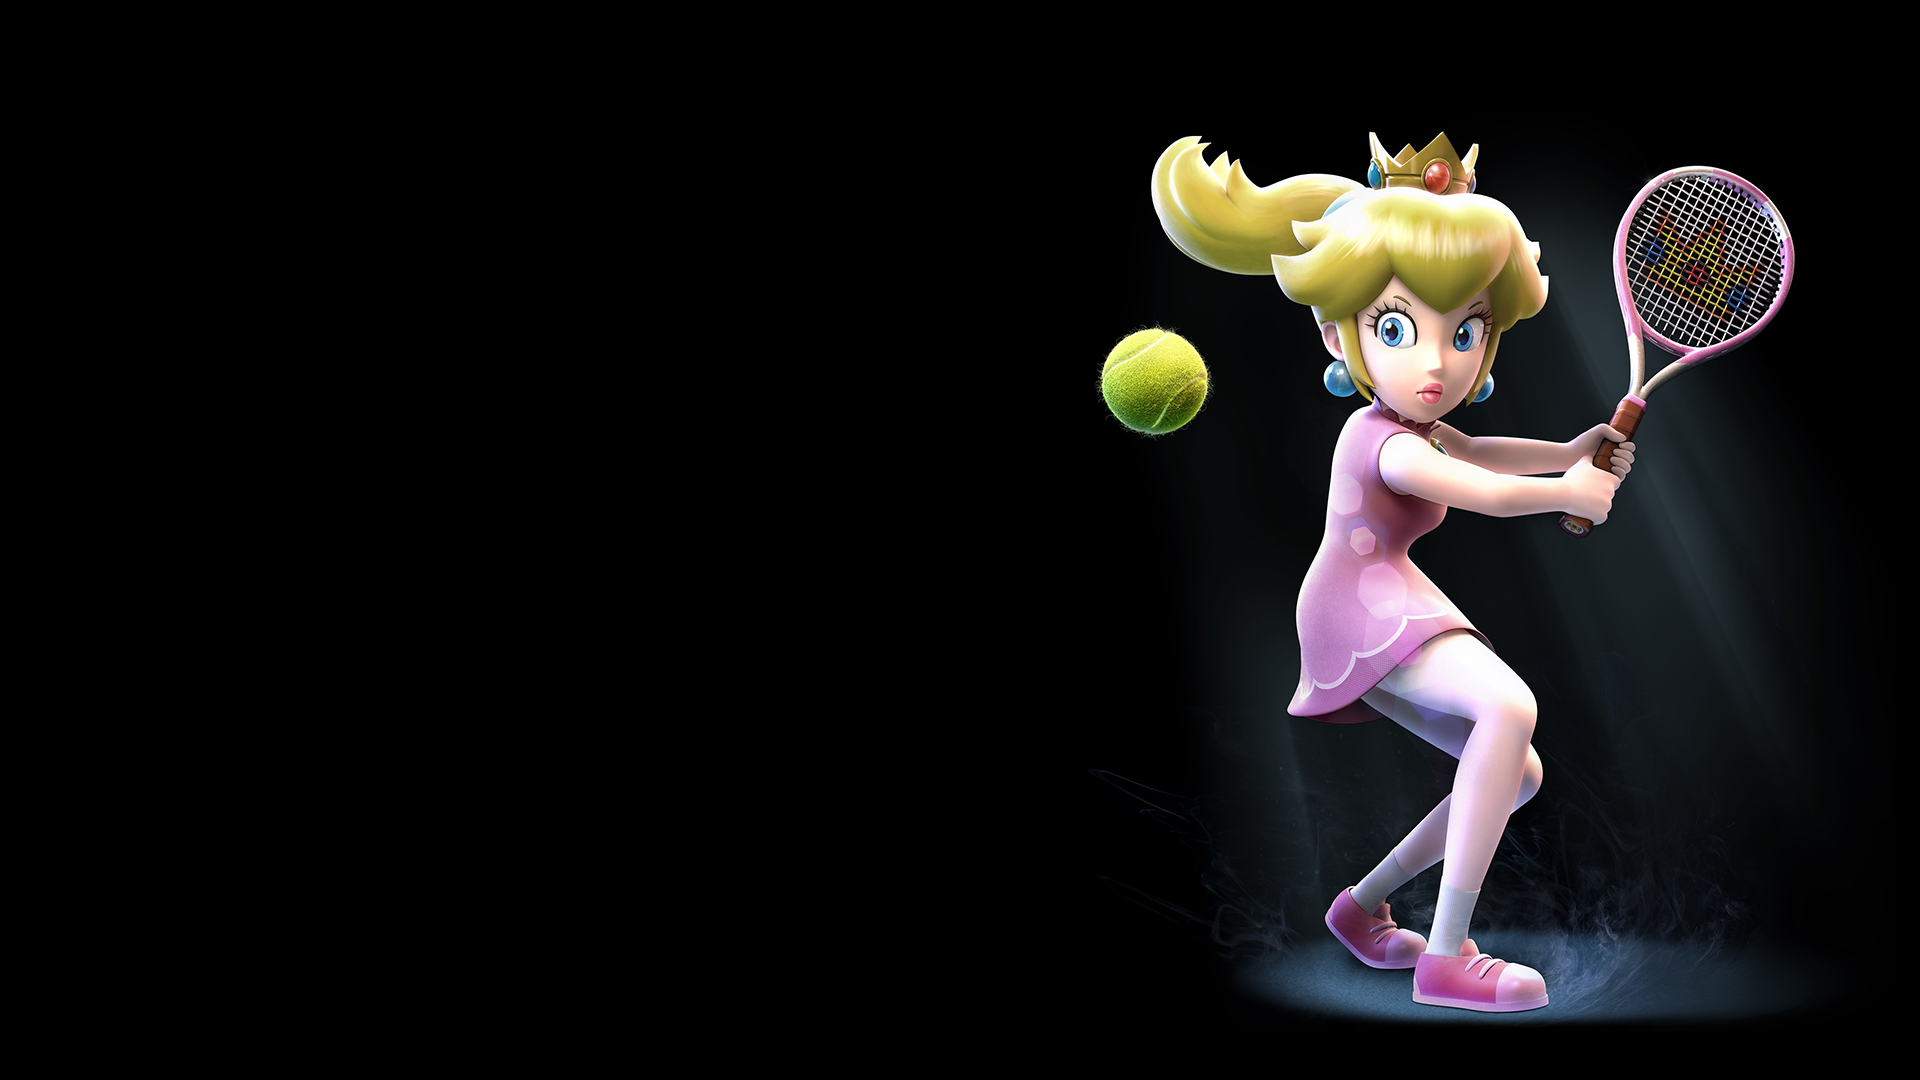 General 1920x1080 Nintendo Super Mario video games tennis tennis balls tennis rackets Princess Peach video game girls video game characters black background sport blonde pink dress